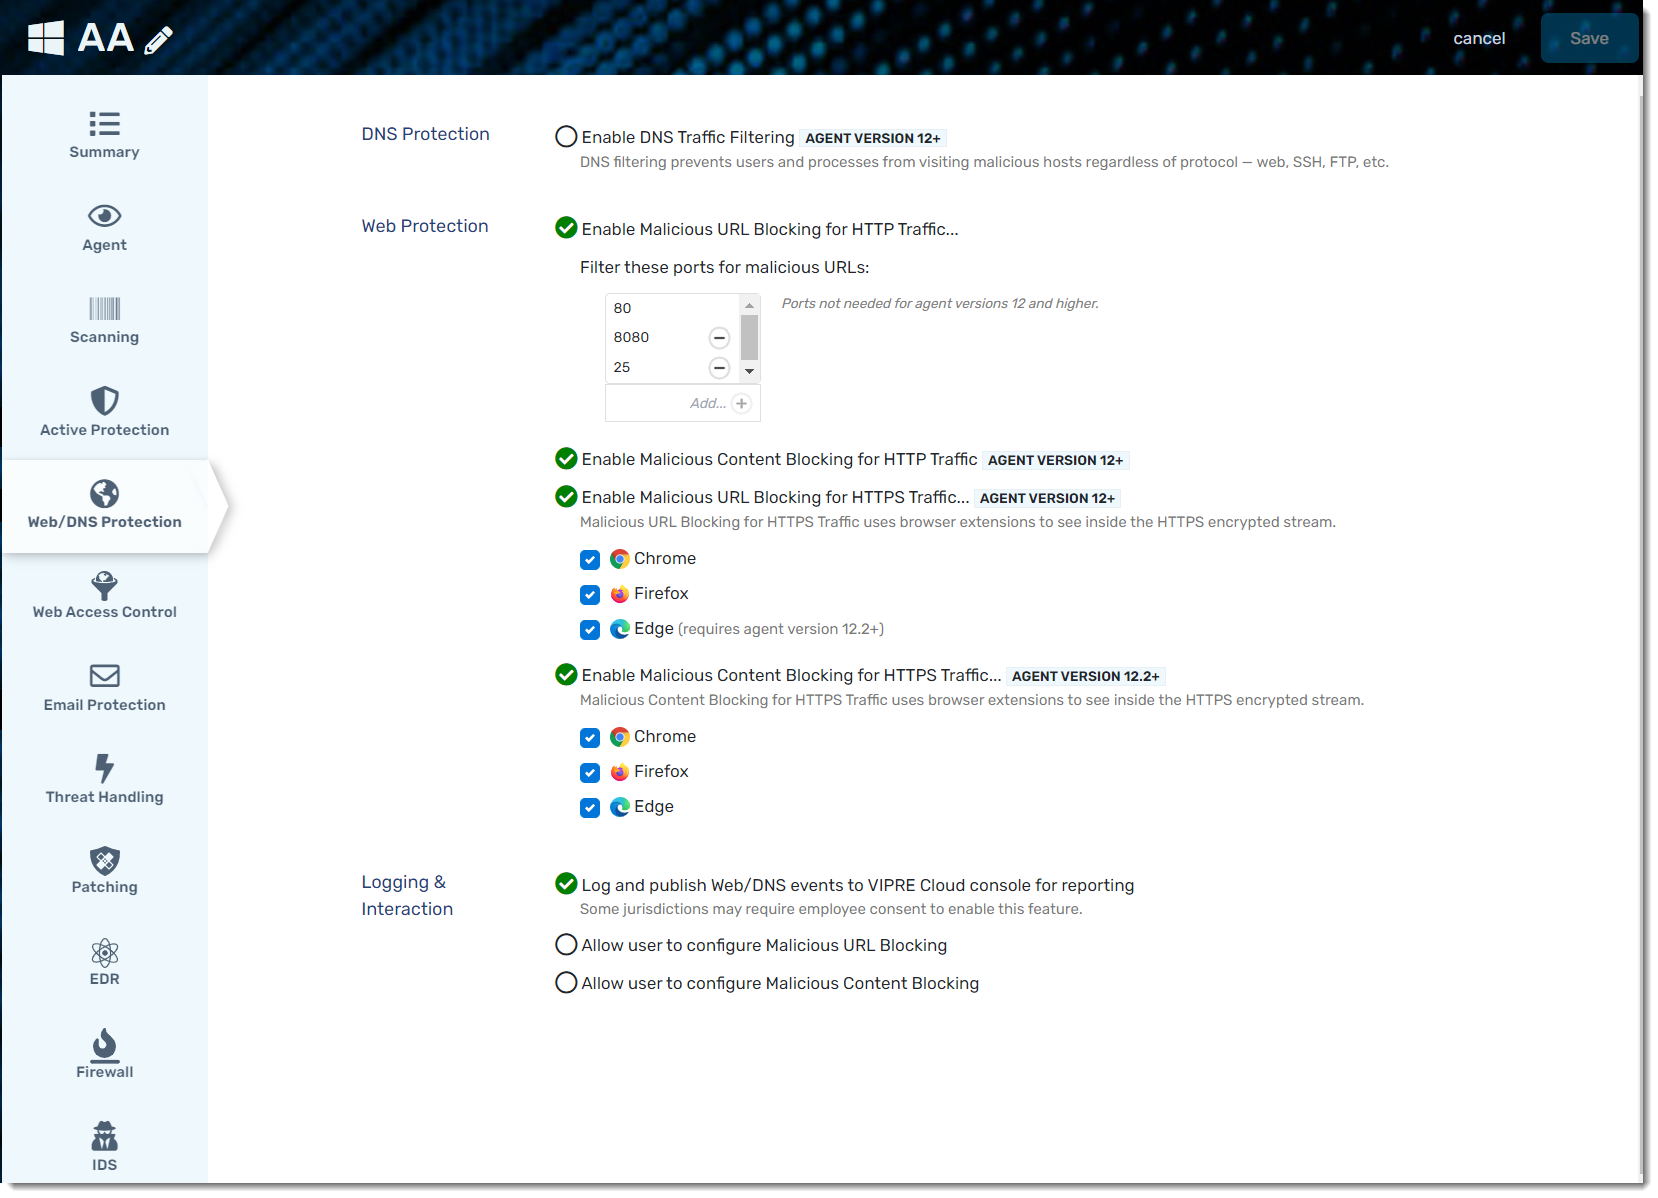 Screenshot: Web and DNS Protection options